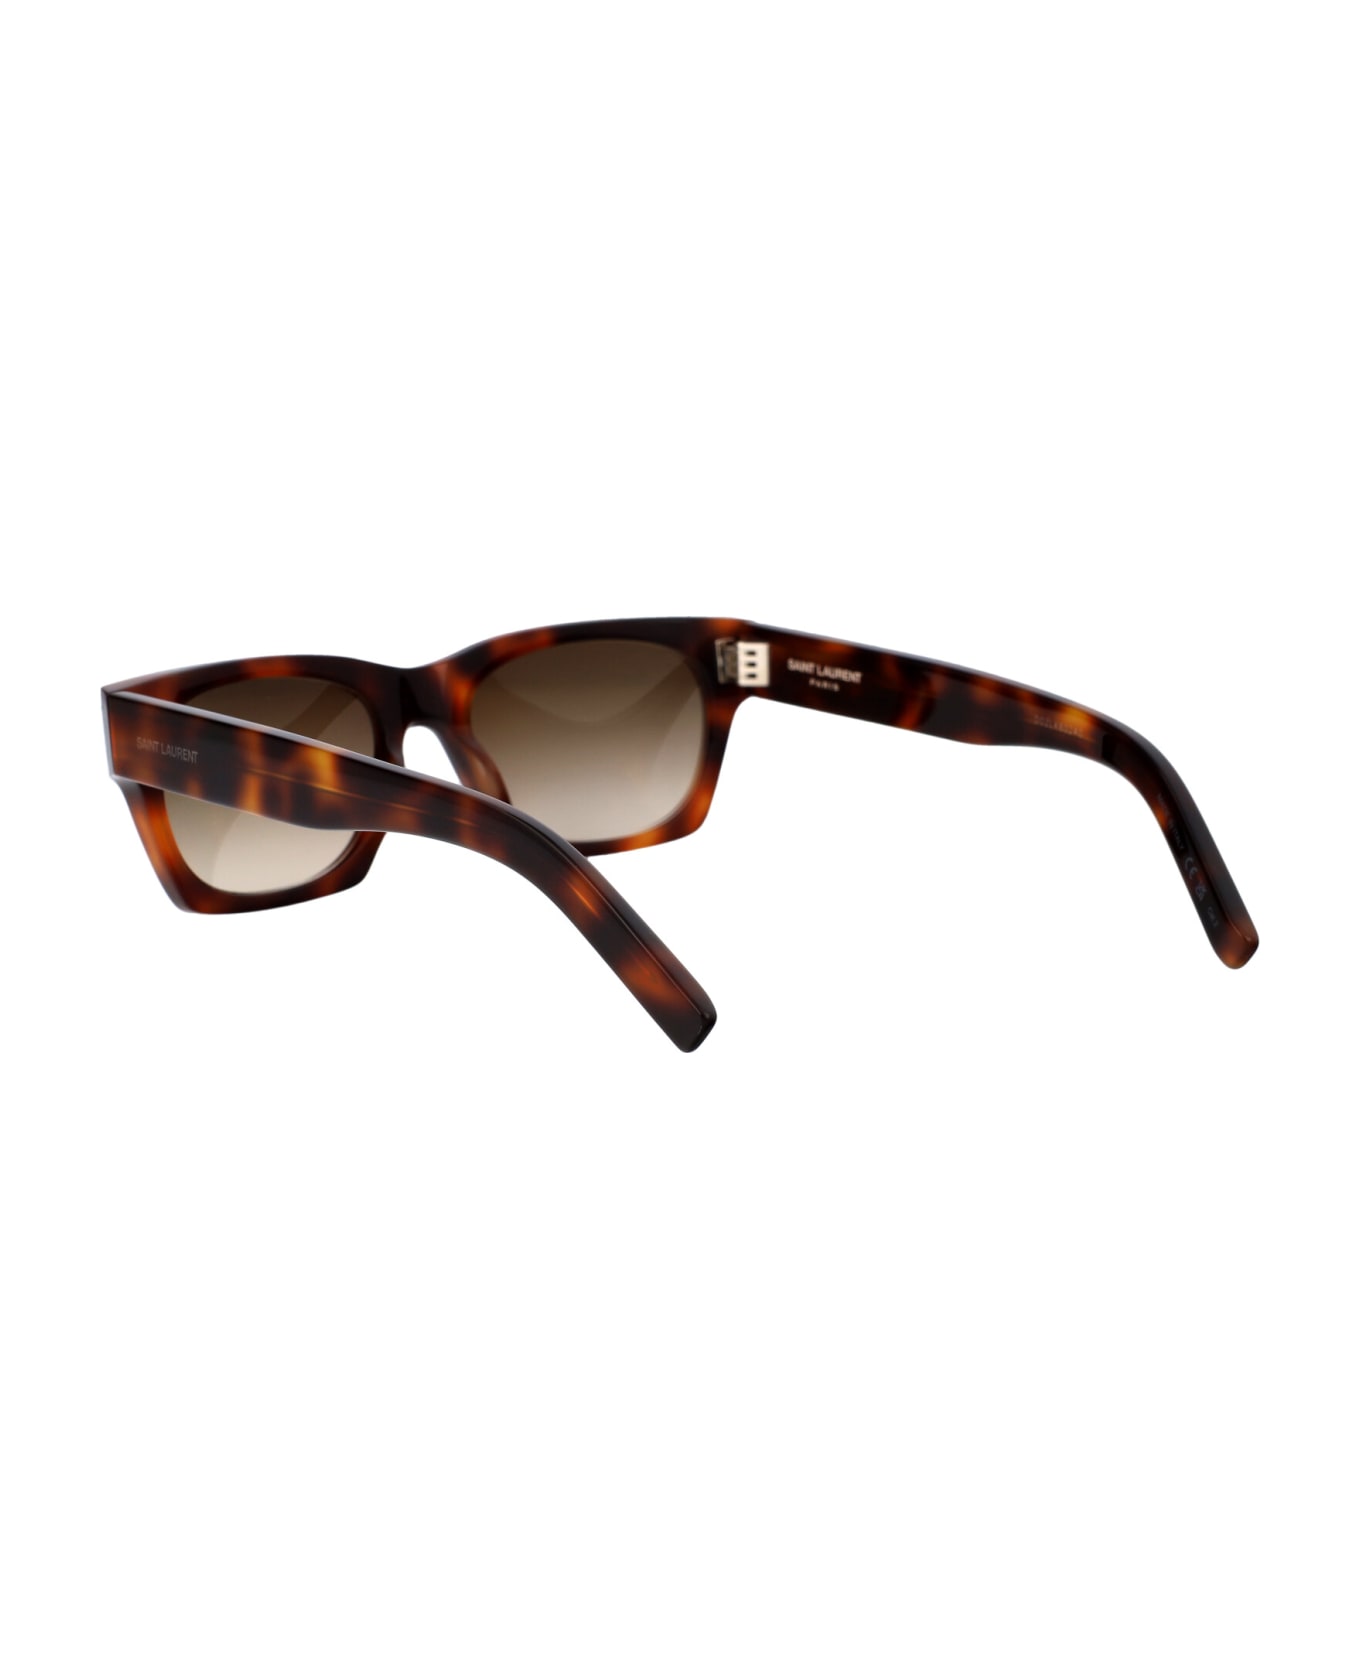 Saint Laurent Eyewear Sl 402 Sunglasses - 019 HAVANA HAVANA BROWN